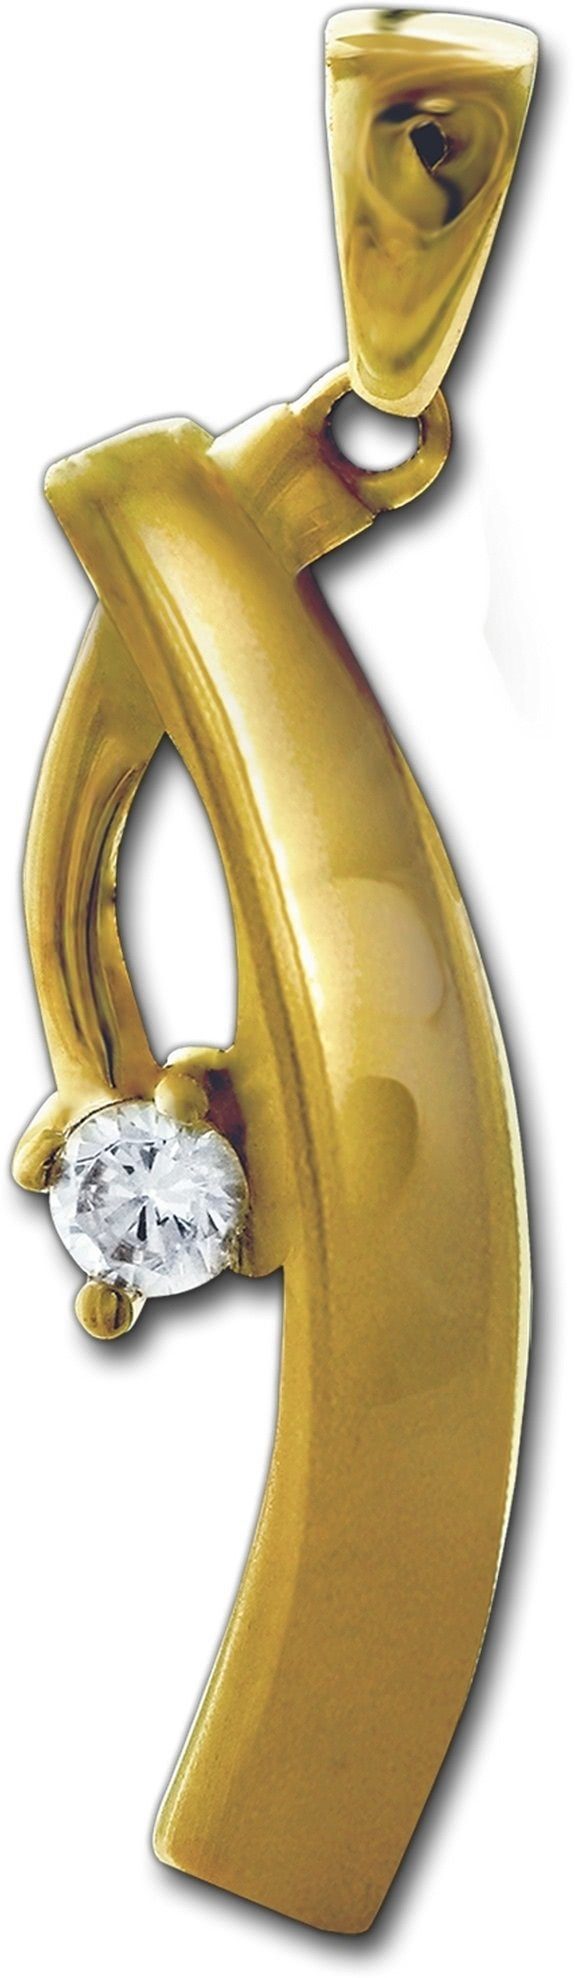 GoldDream Kettenanhänger GoldDream Kettenanhänger Elegance 8K, Kettenanhänger ca. 29mm, 333 Gelbgold - 8 Karat (Elegance)